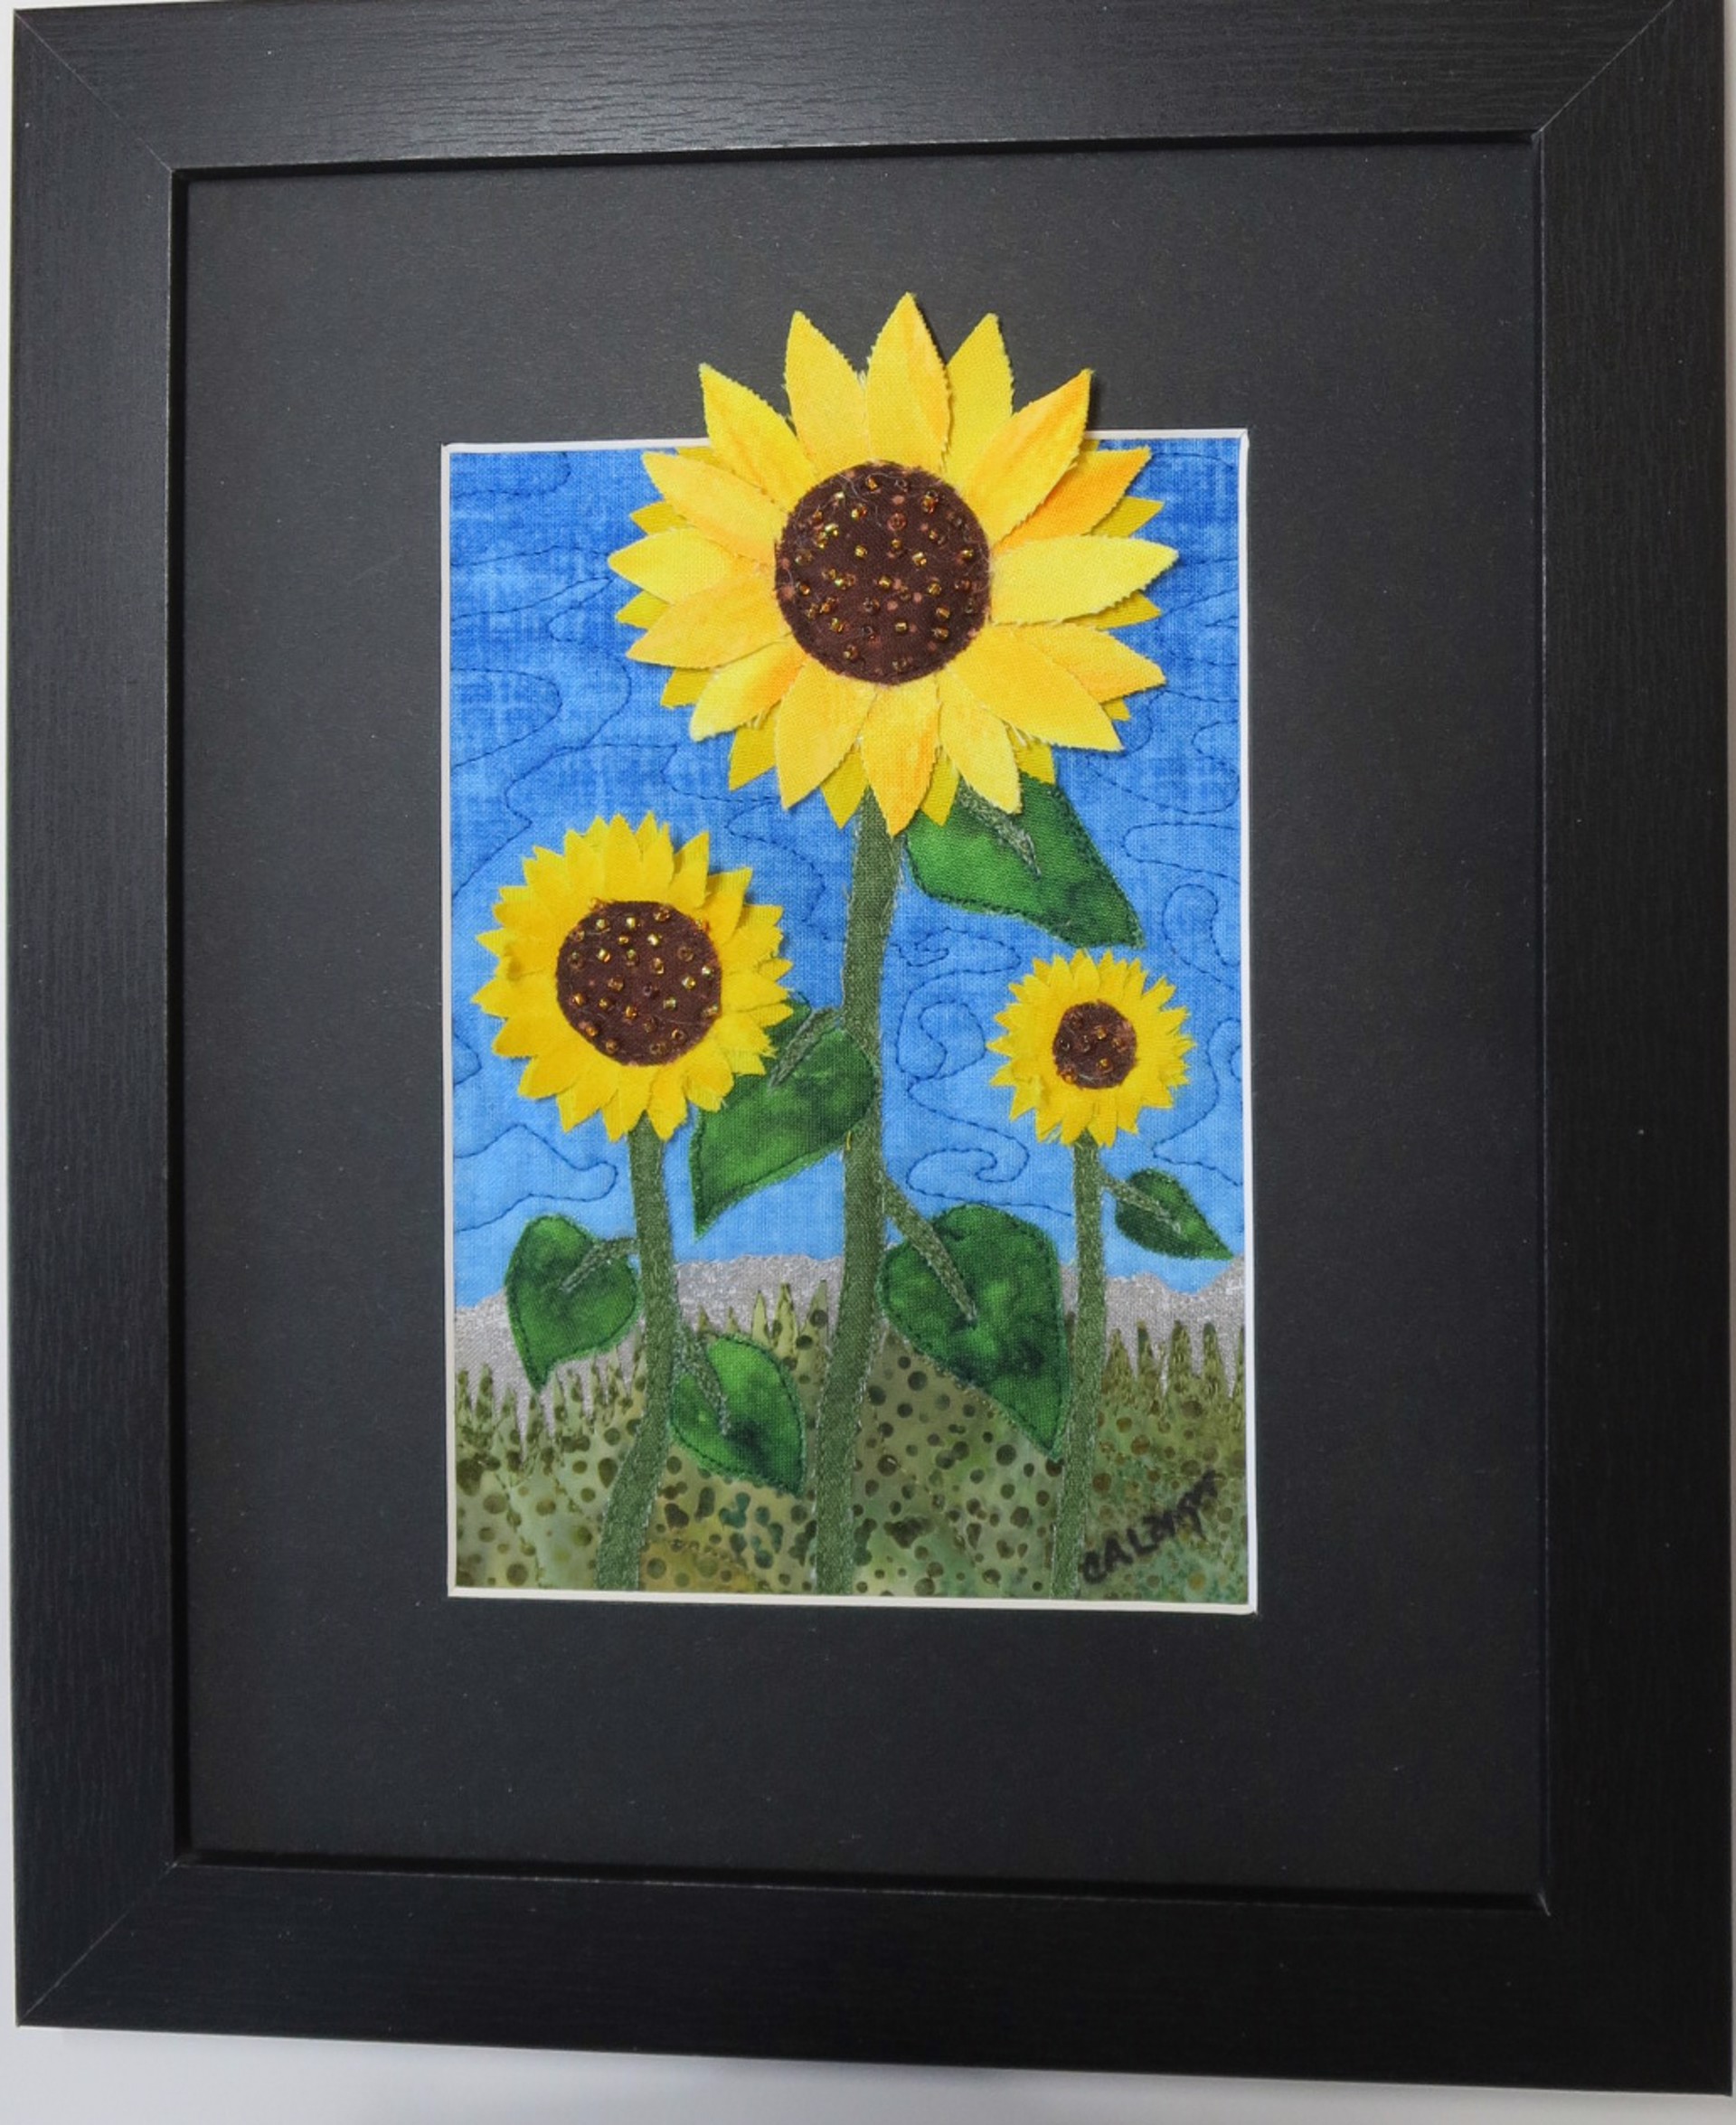 Sunflowers 2 by Cheryl Langer